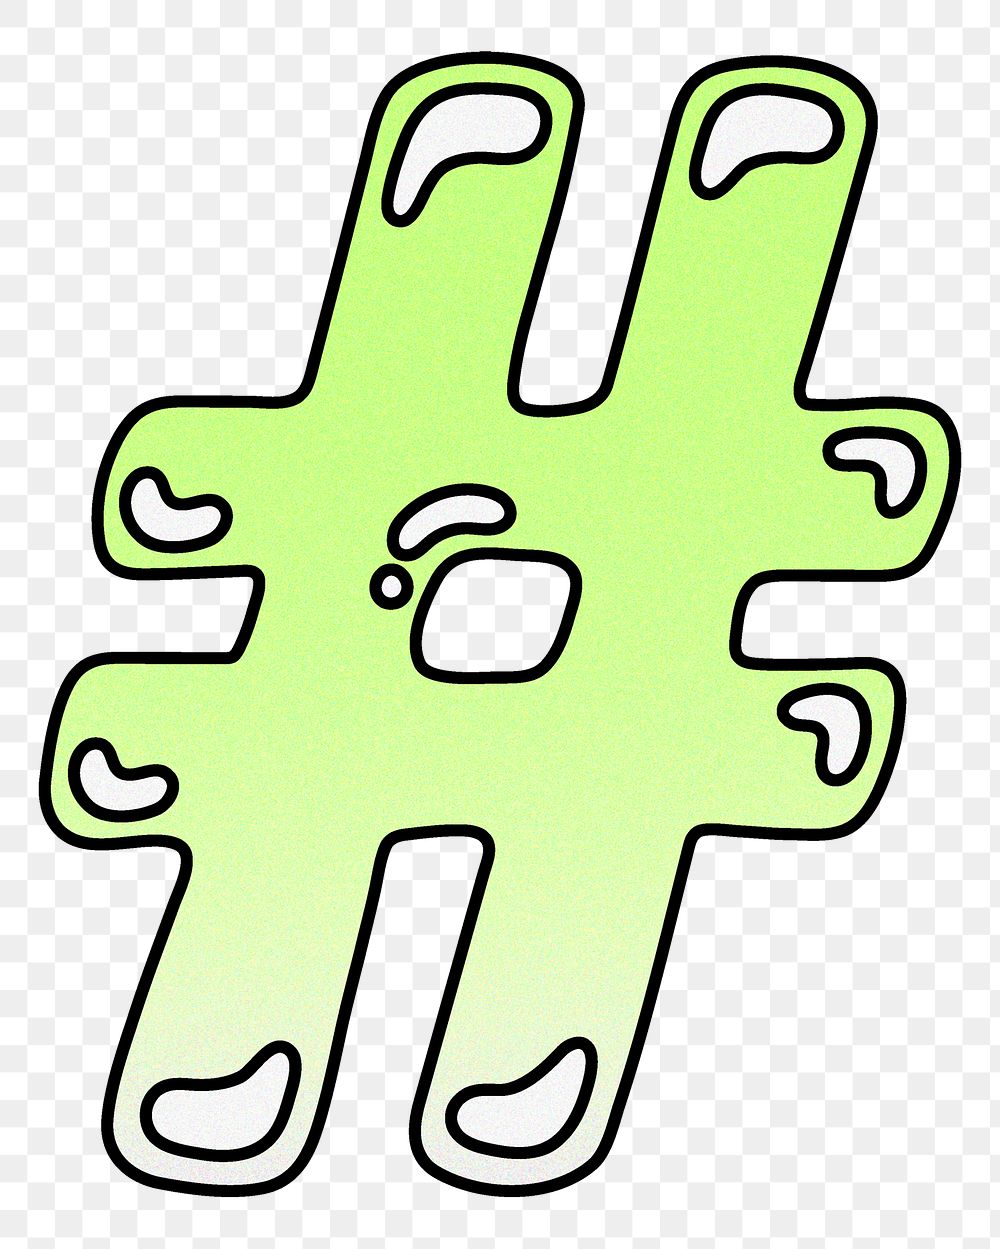 Hashtag  sign png gradient green symbol, transparent background